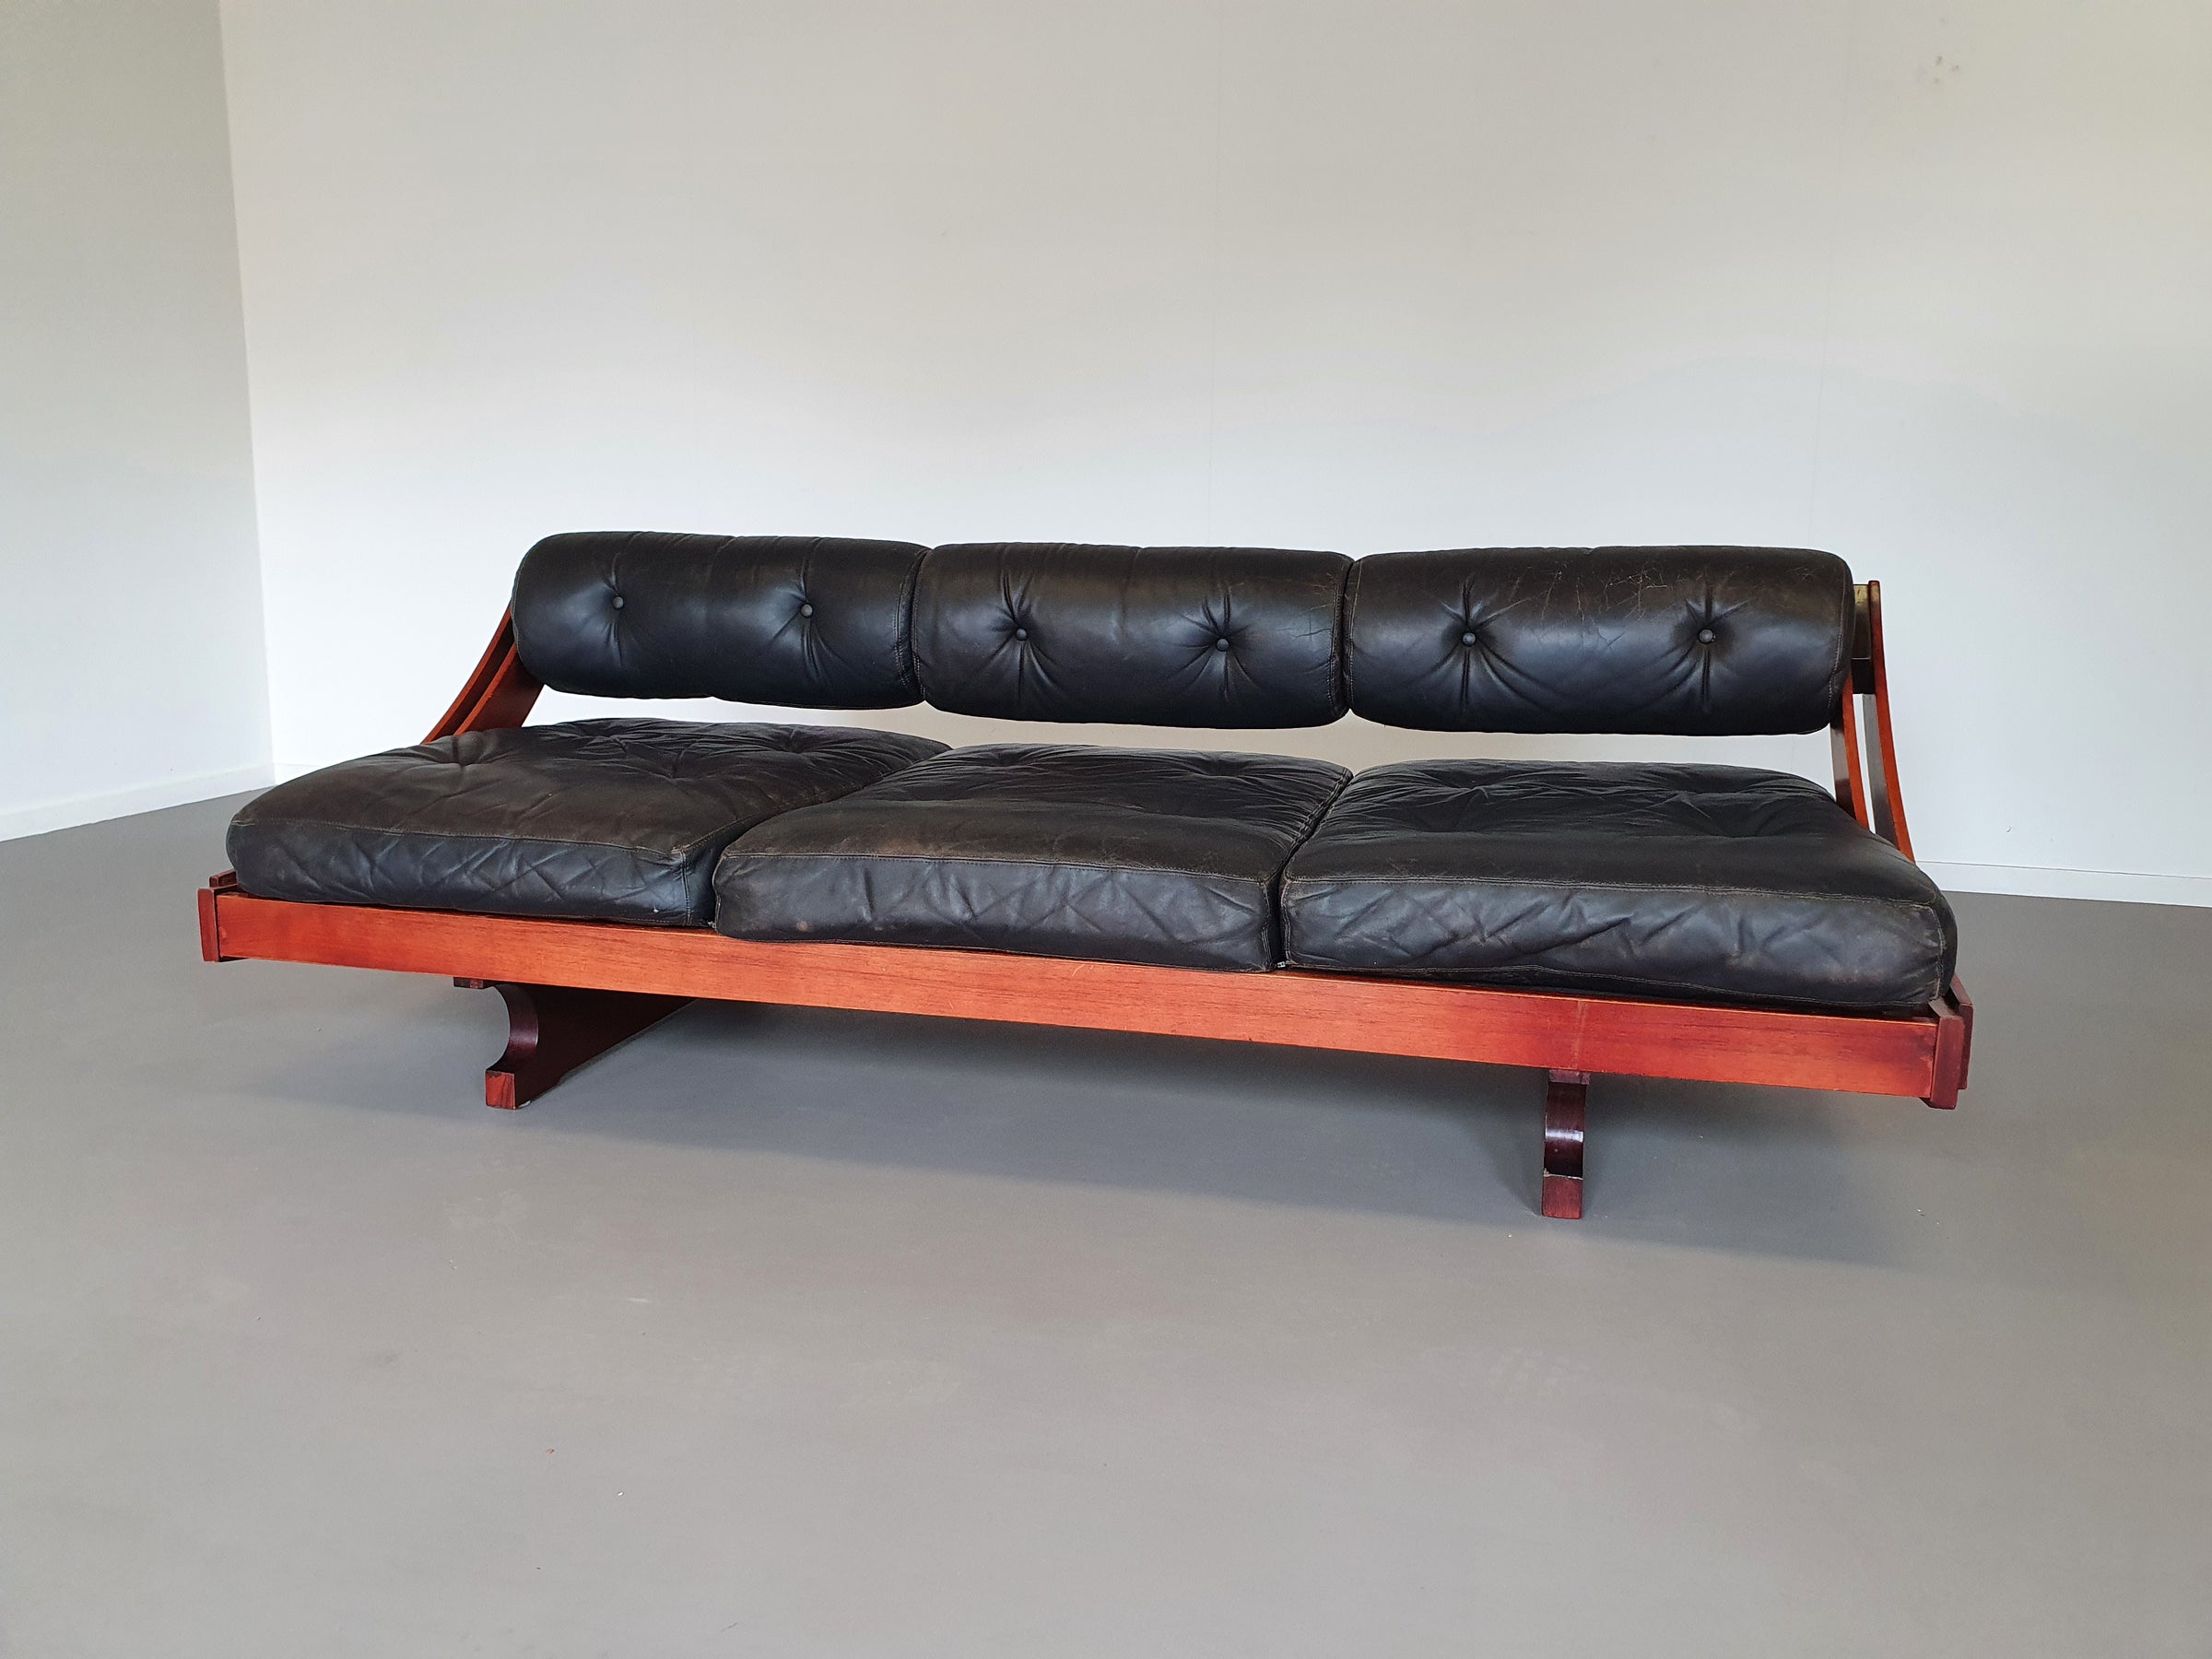 Gianni Songia Black Leather Daybed Sofa Model GS-195 for Sormani, Italy, 1963

#giannisongia #dakbedekking #sormani